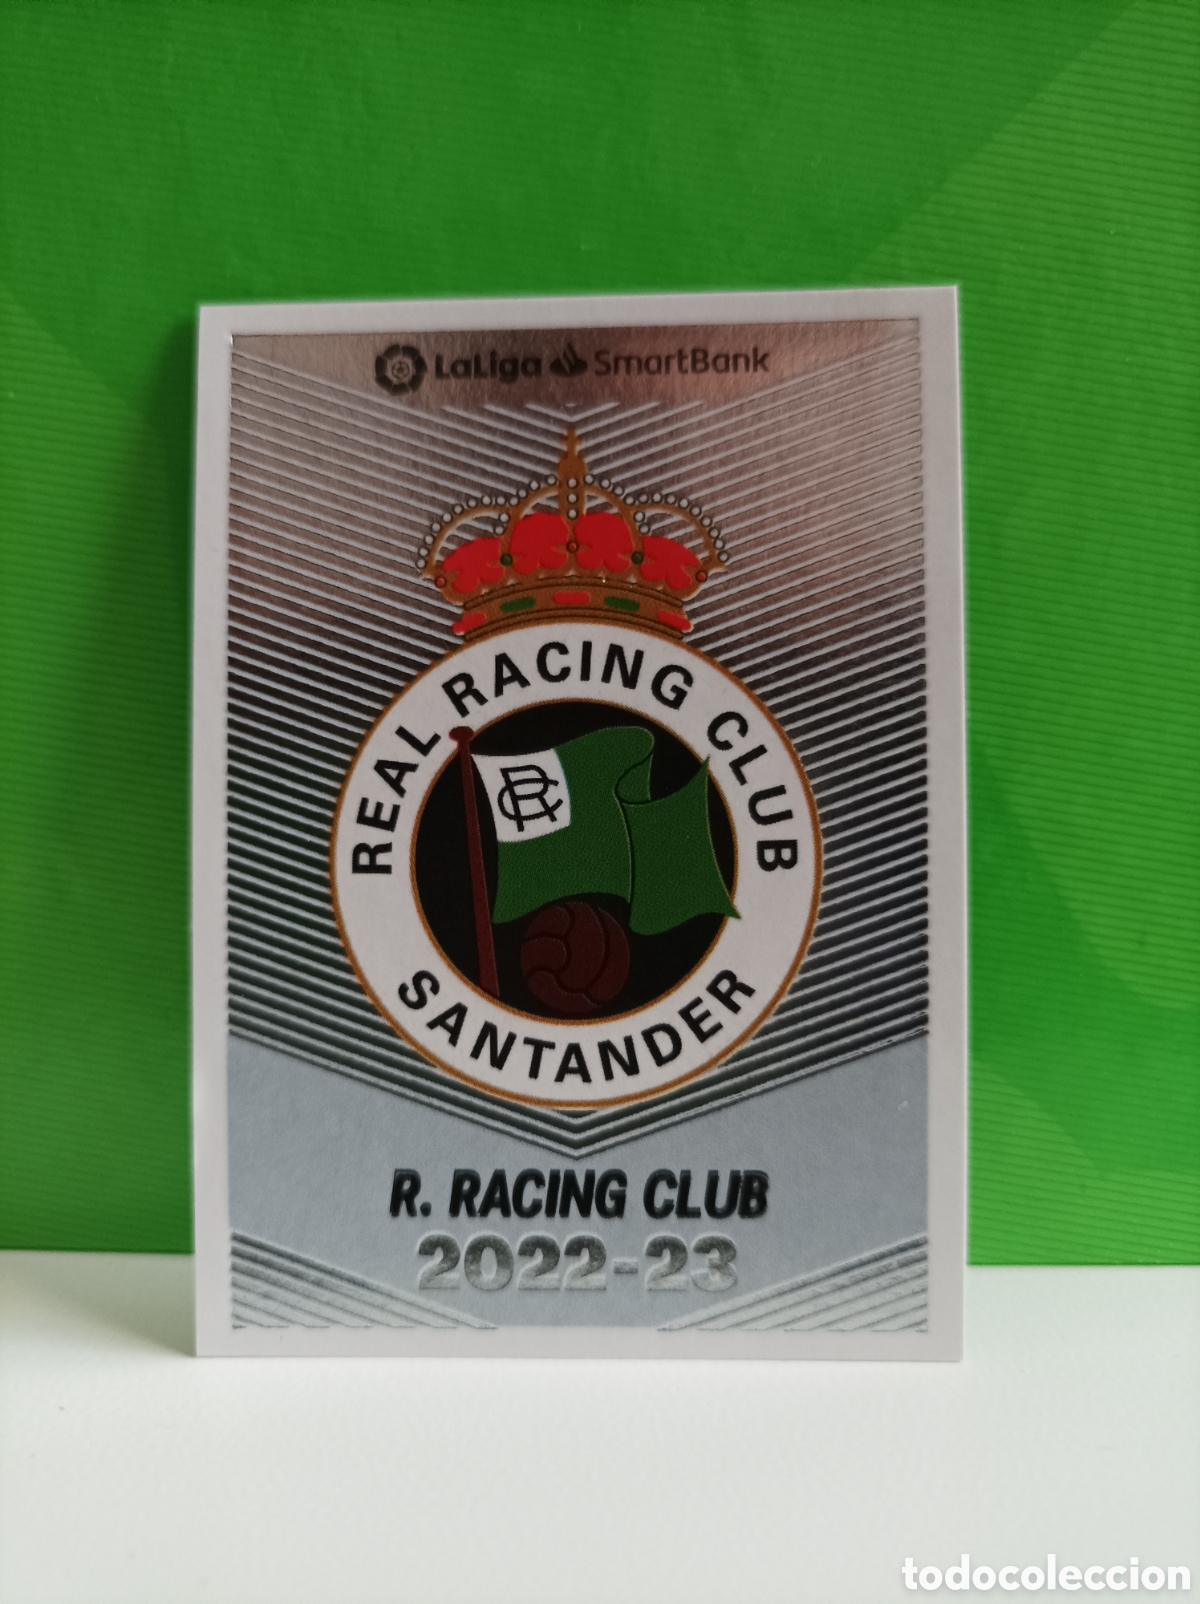 Sale Sticker Racing Club La Liga Smartbank Liga Este 2022 23 Panini